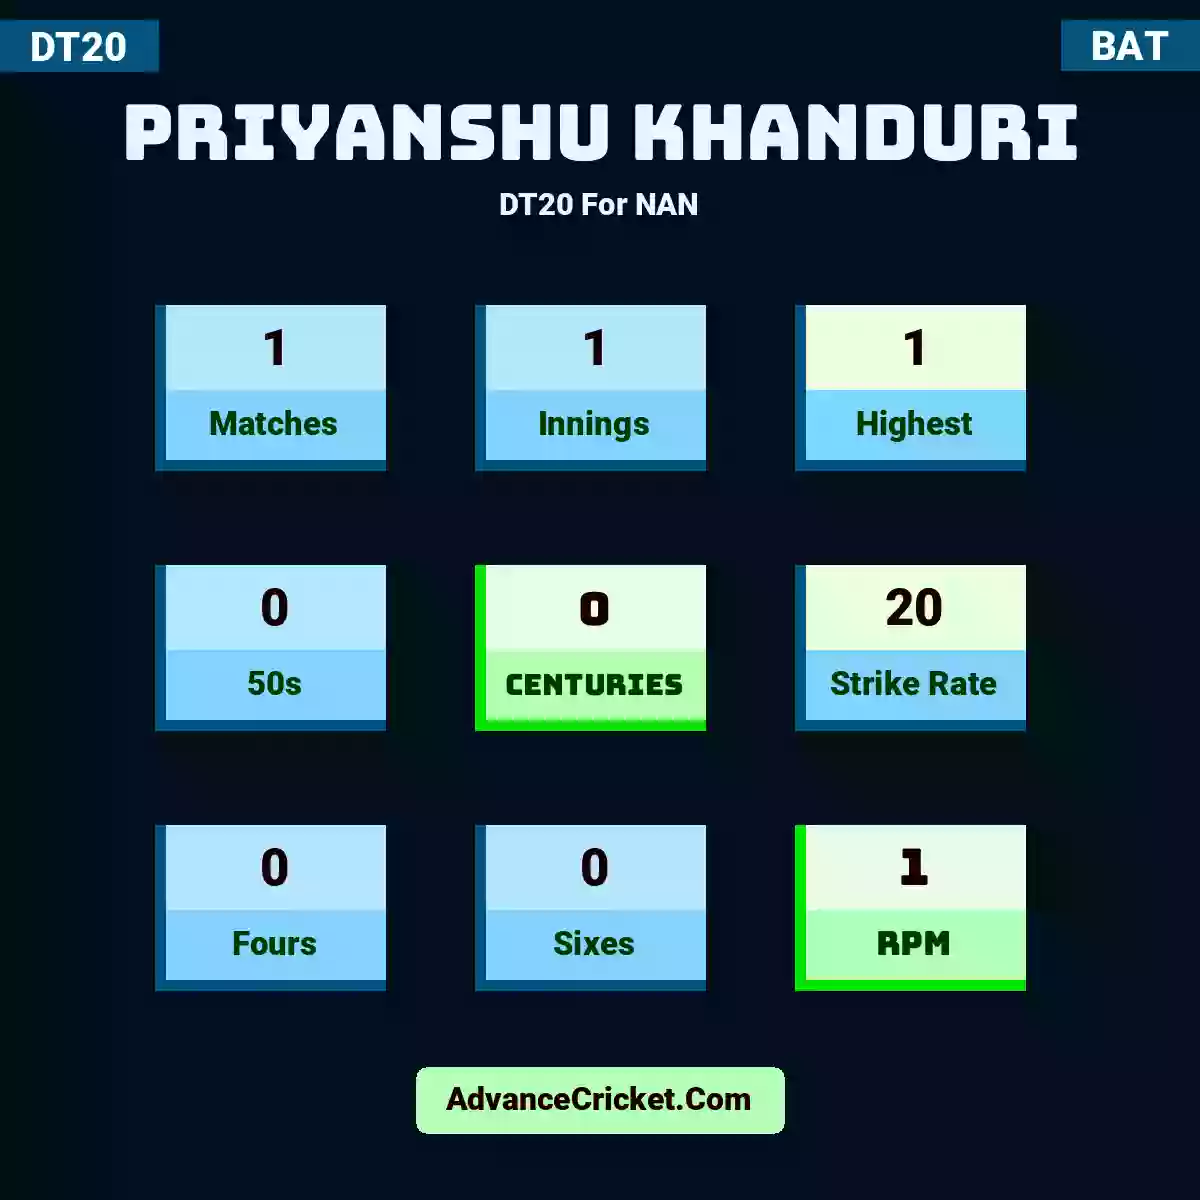 Priyanshu Khanduri DT20  For NAN, Priyanshu Khanduri played 1 matches, scored 1 runs as highest, 0 half-centuries, and 0 centuries, with a strike rate of 20. P.Khanduri hit 0 fours and 0 sixes, with an RPM of 1.